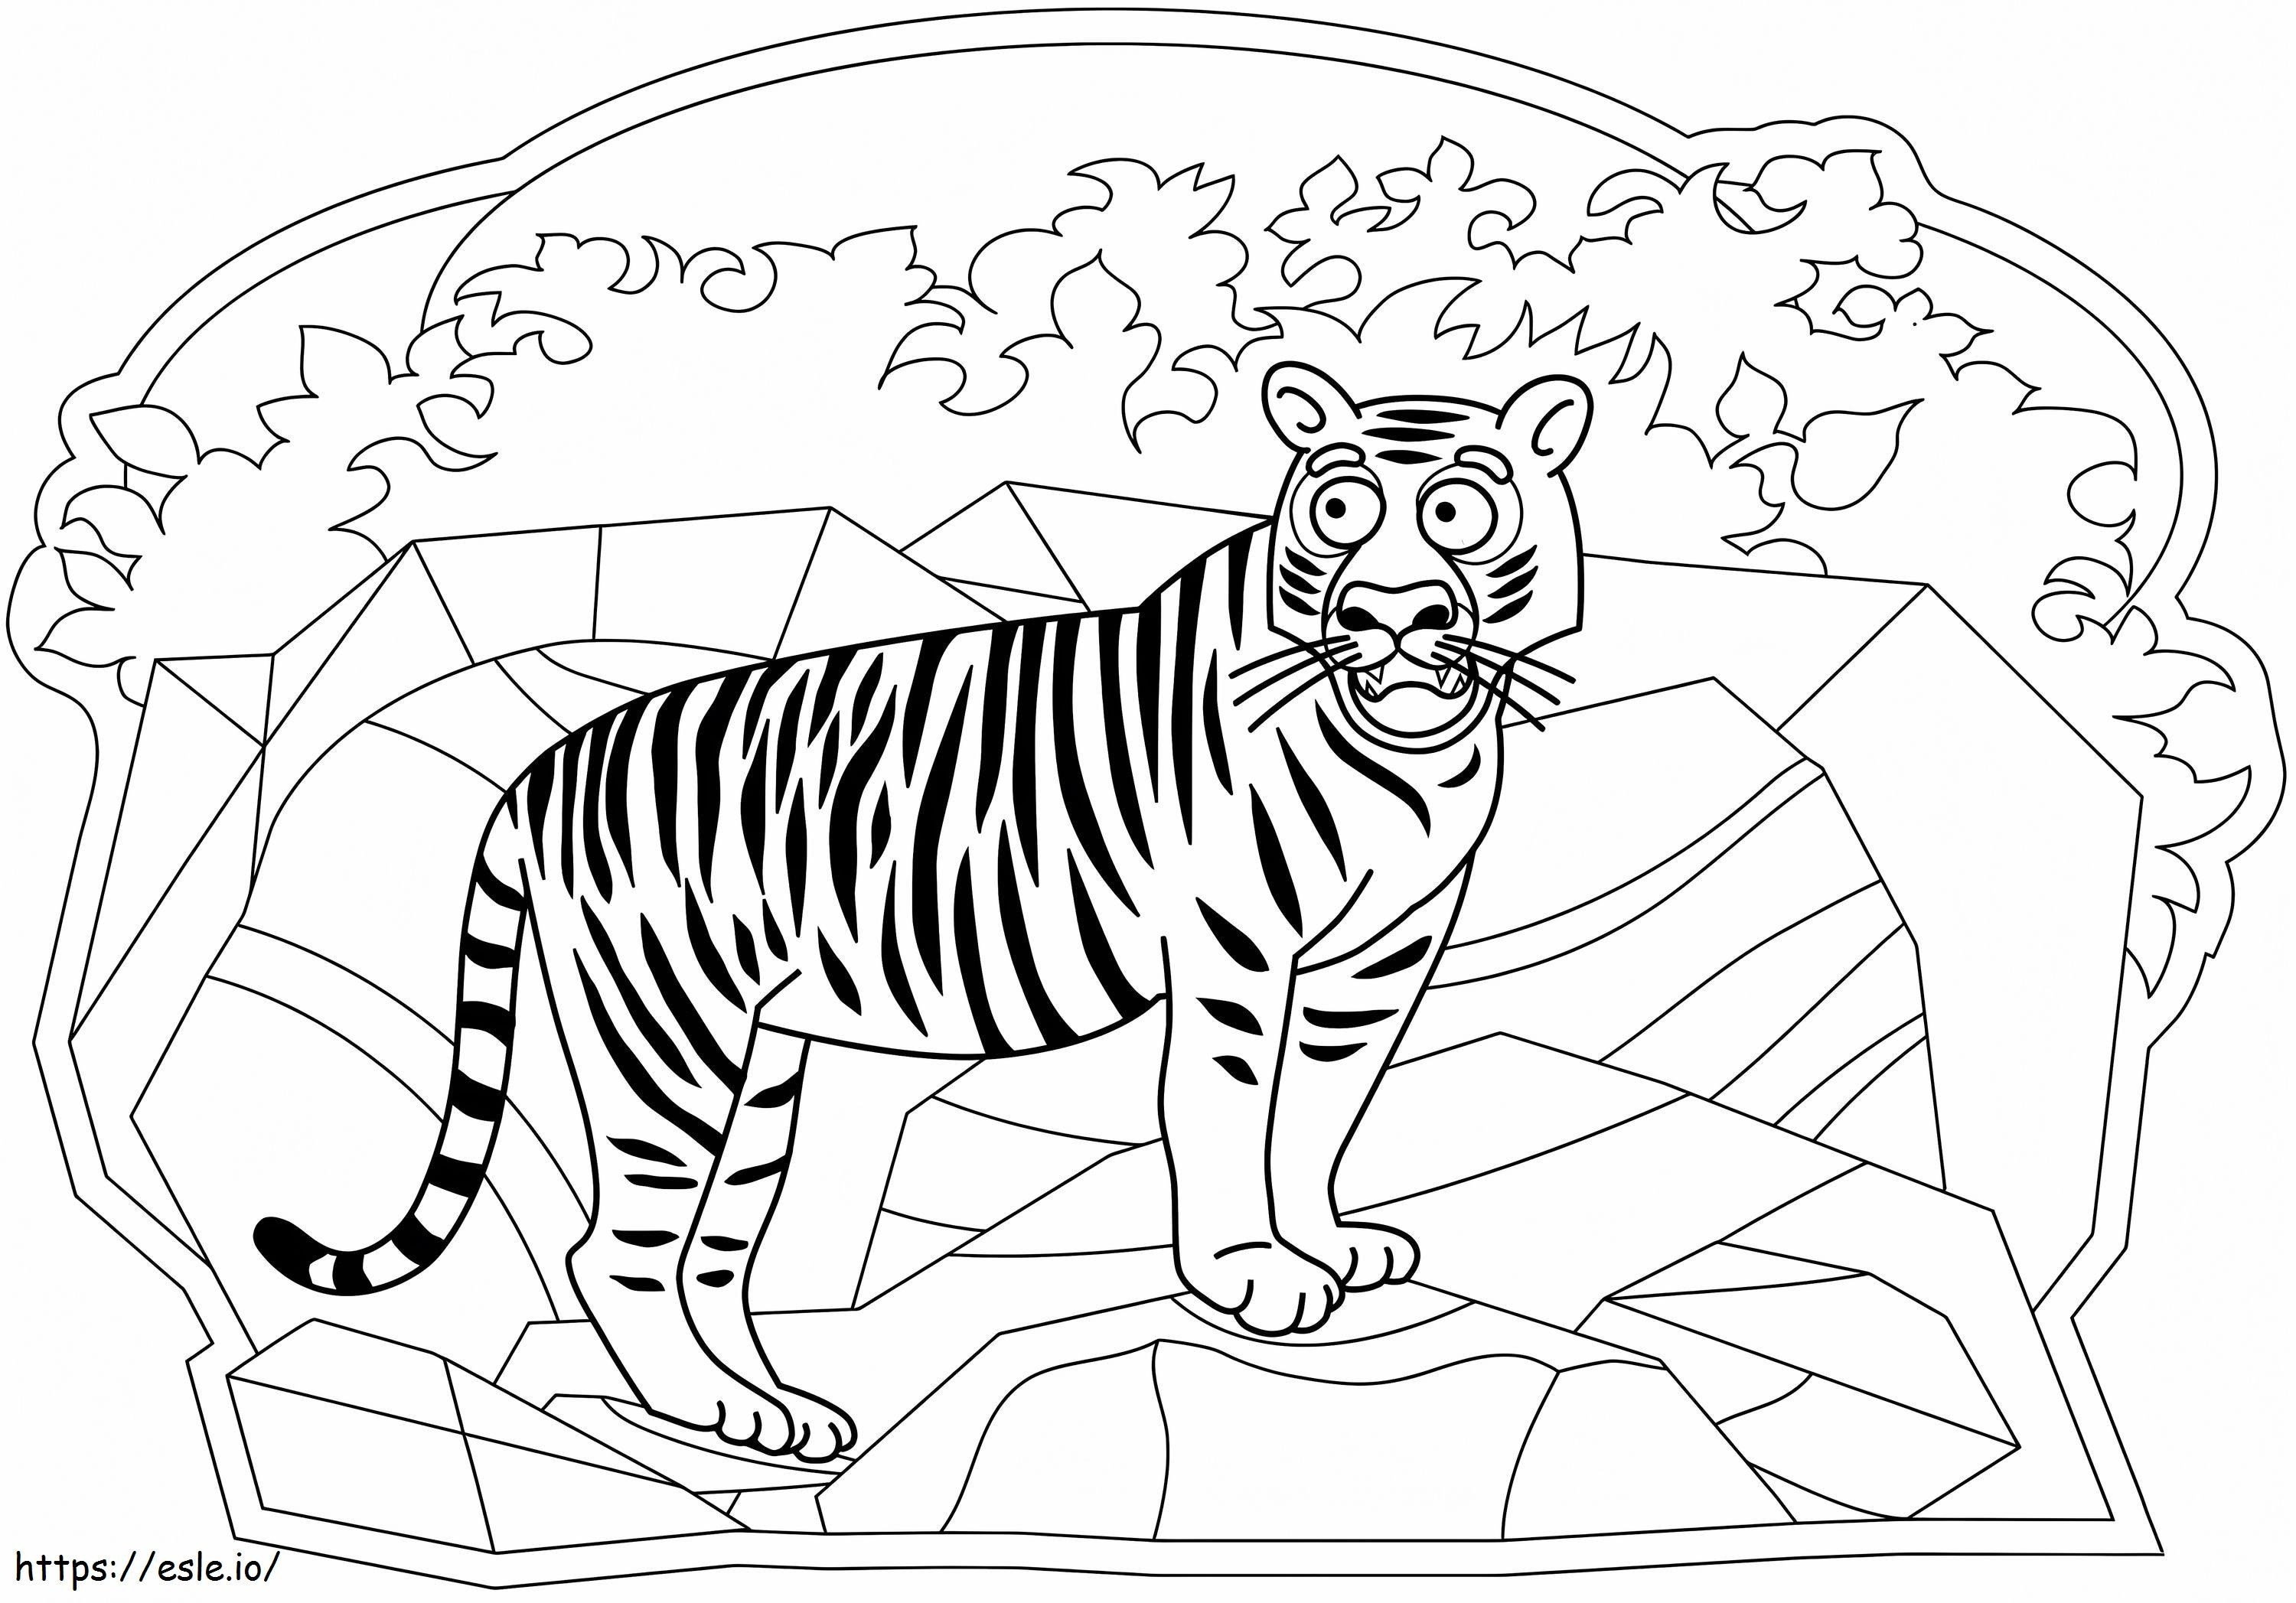 Surprising Tiger coloring page